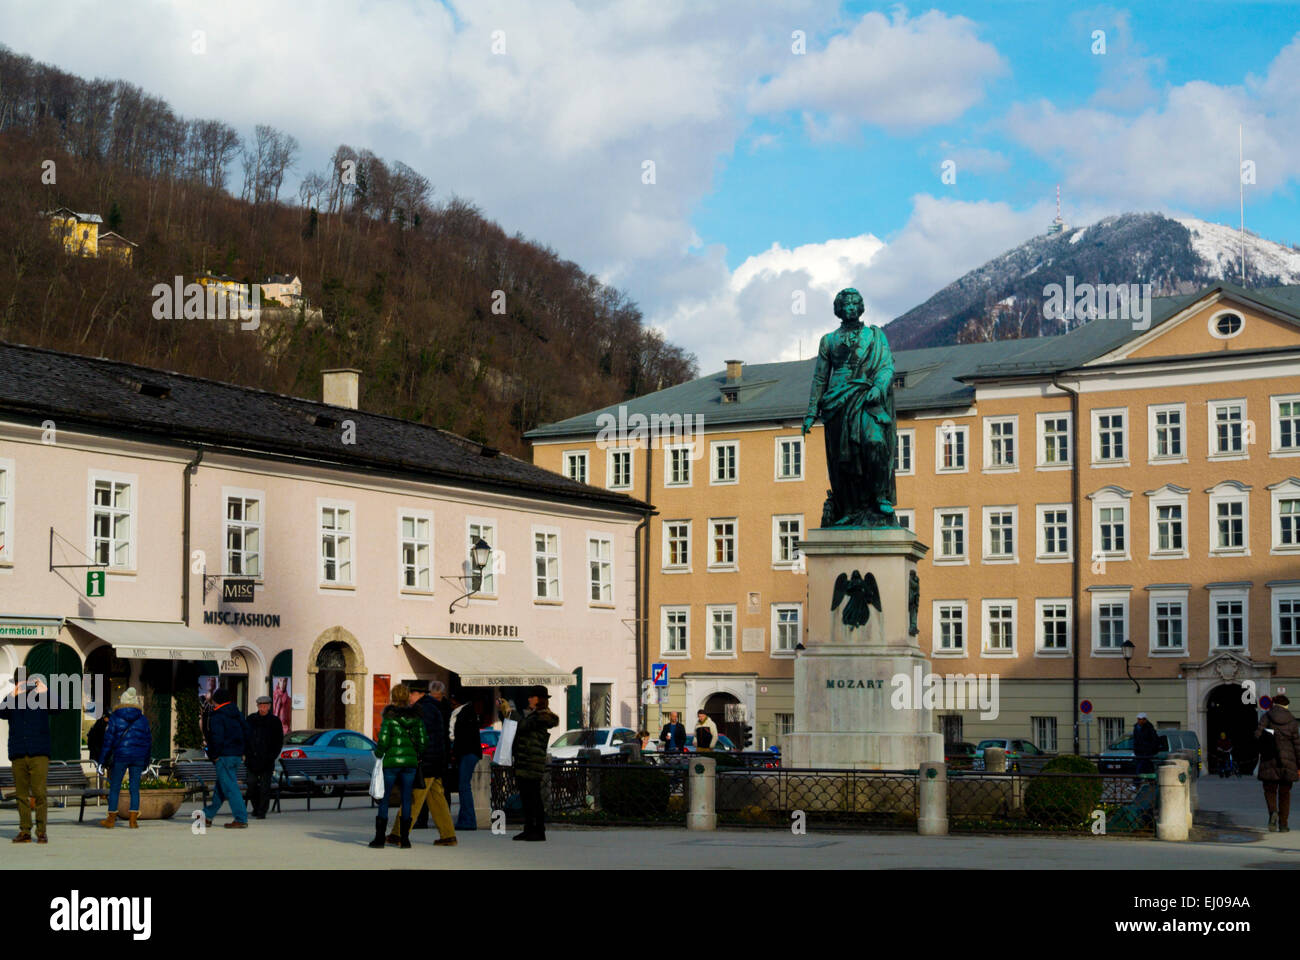 Mozart statue, Mozartplatz, Altstadt, old town, Salzburg, Austria Stock Photo